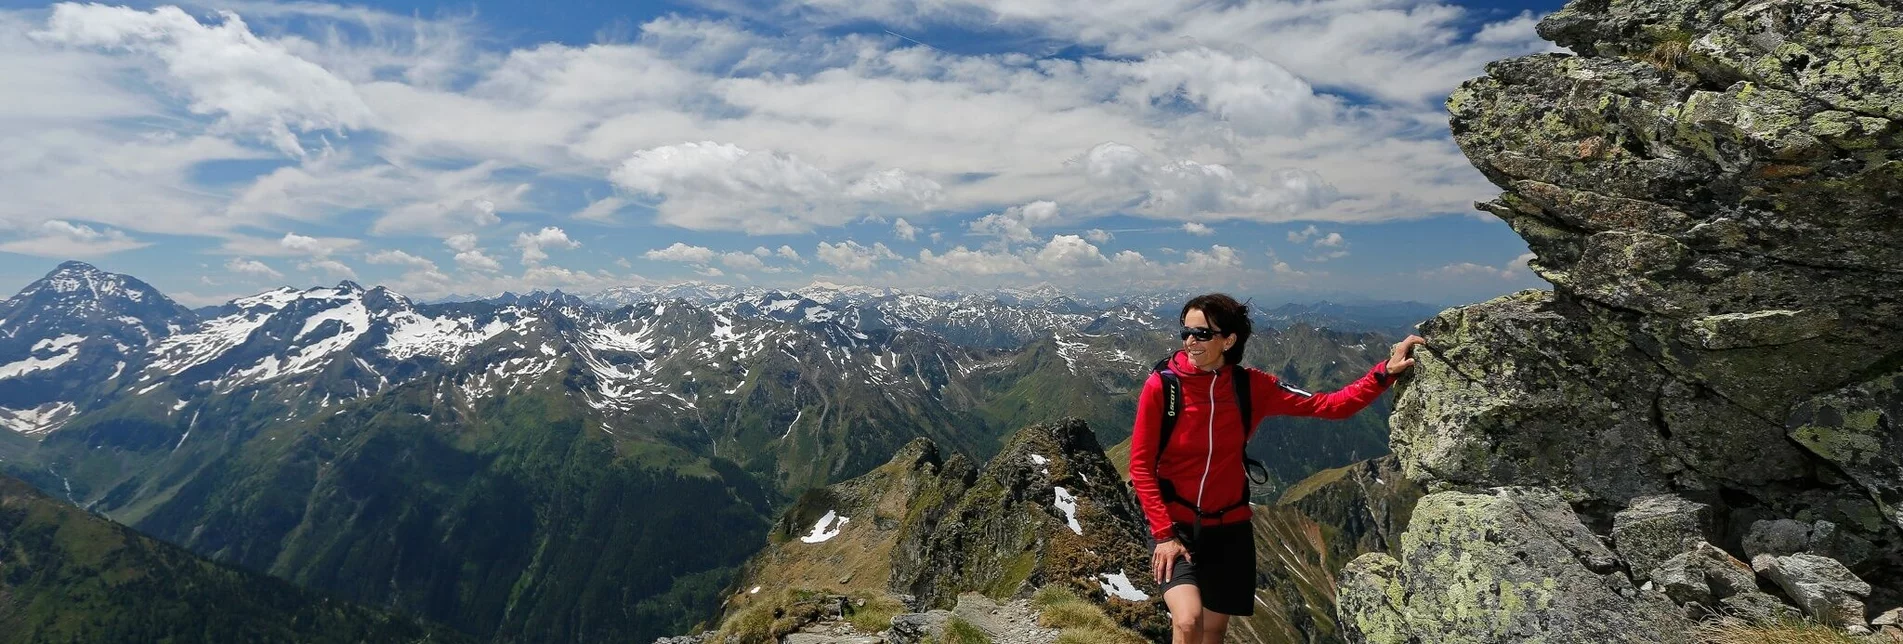 Bergtour Höchstein (2.543 m) - Touren-Impression #1 | © Herbert Raffalt